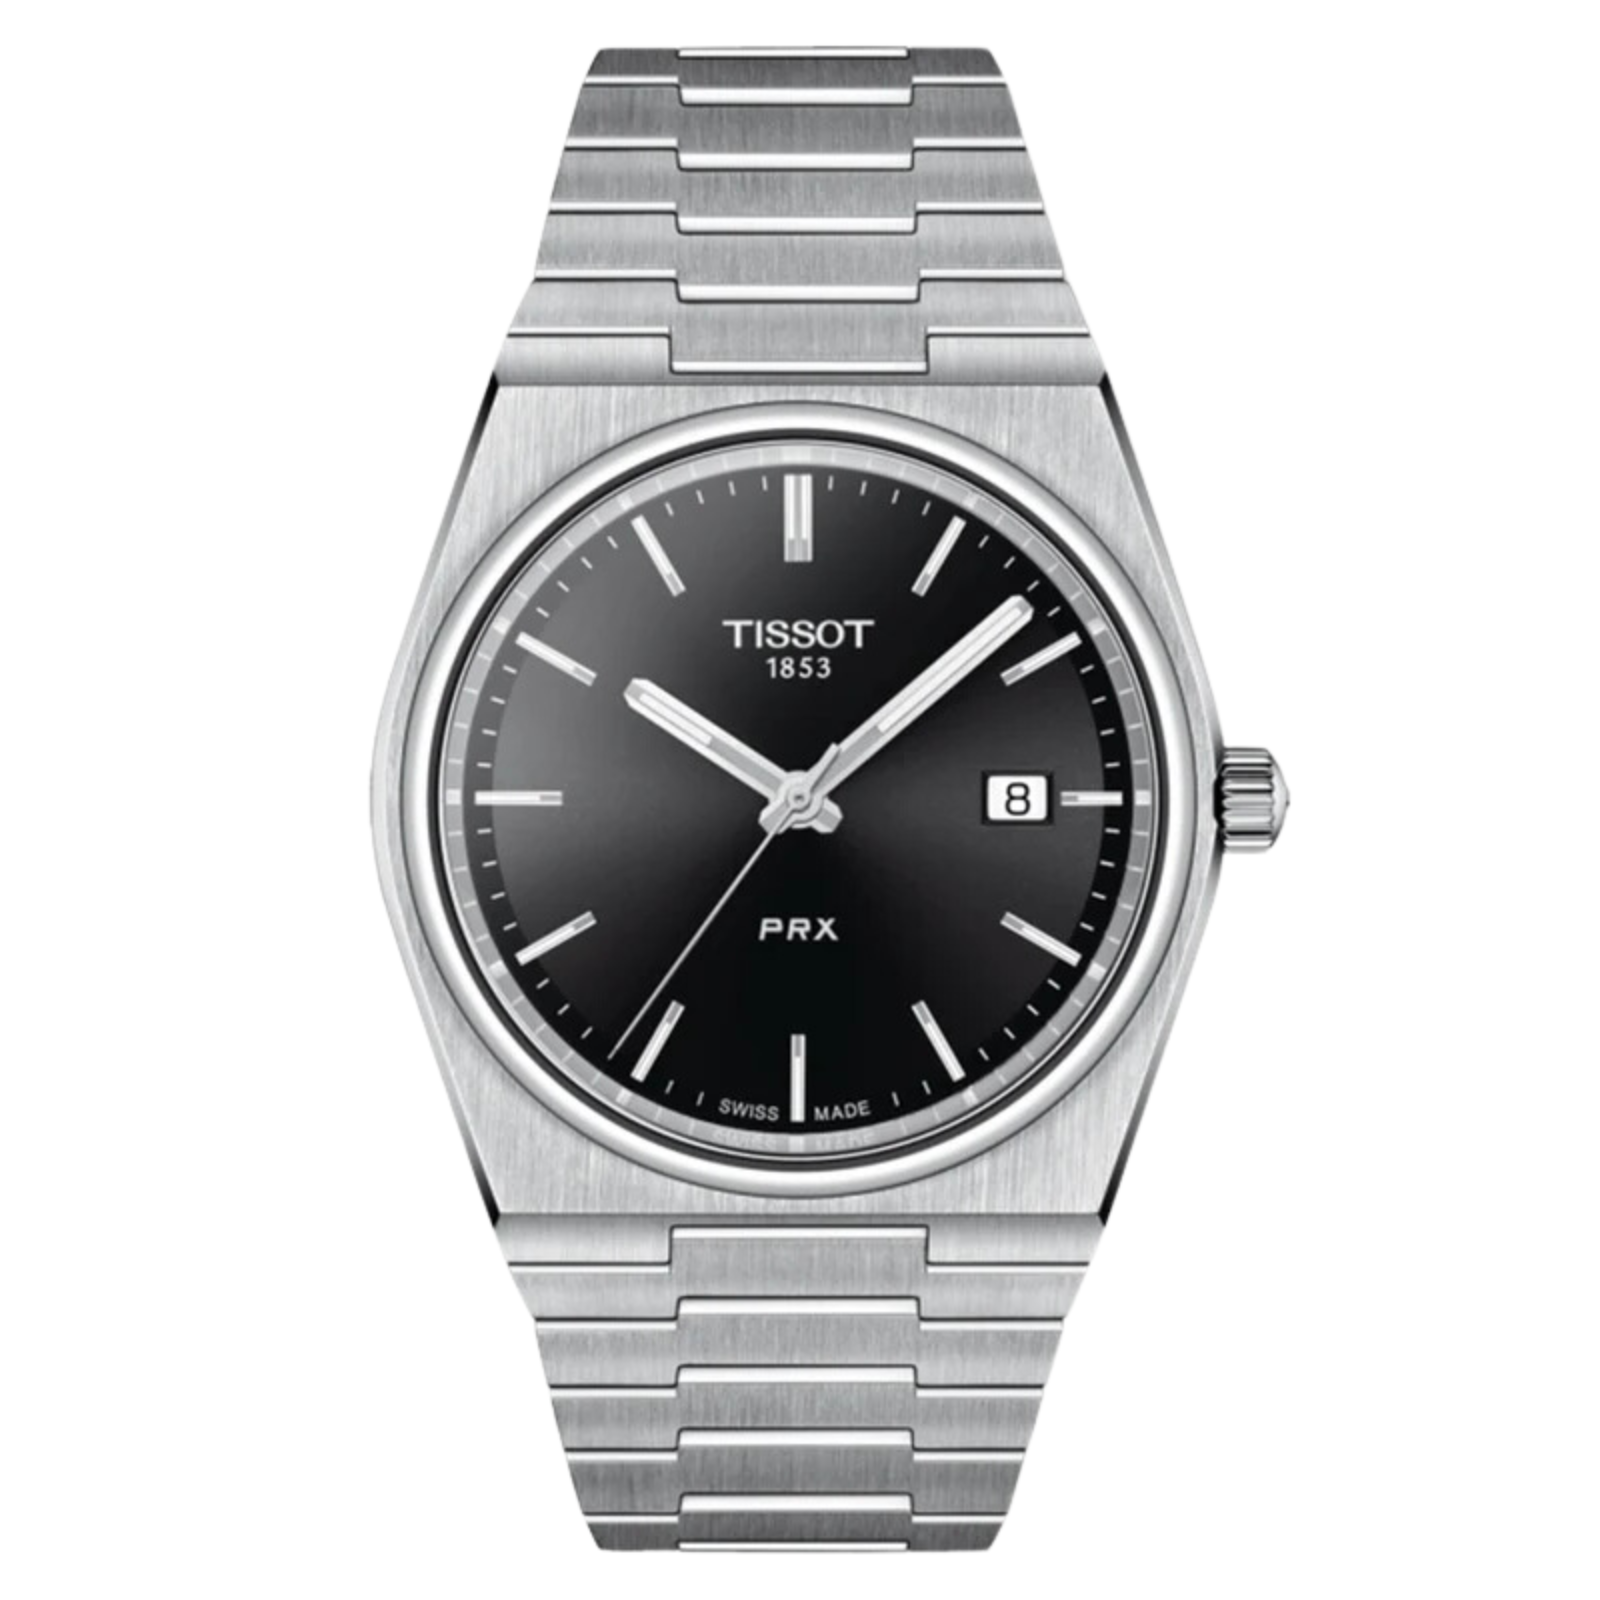 Tissot 1853 PRX Quartz T1374101105100 T137.410.11.051.00 Black Dial Dress Watch - Skywatches